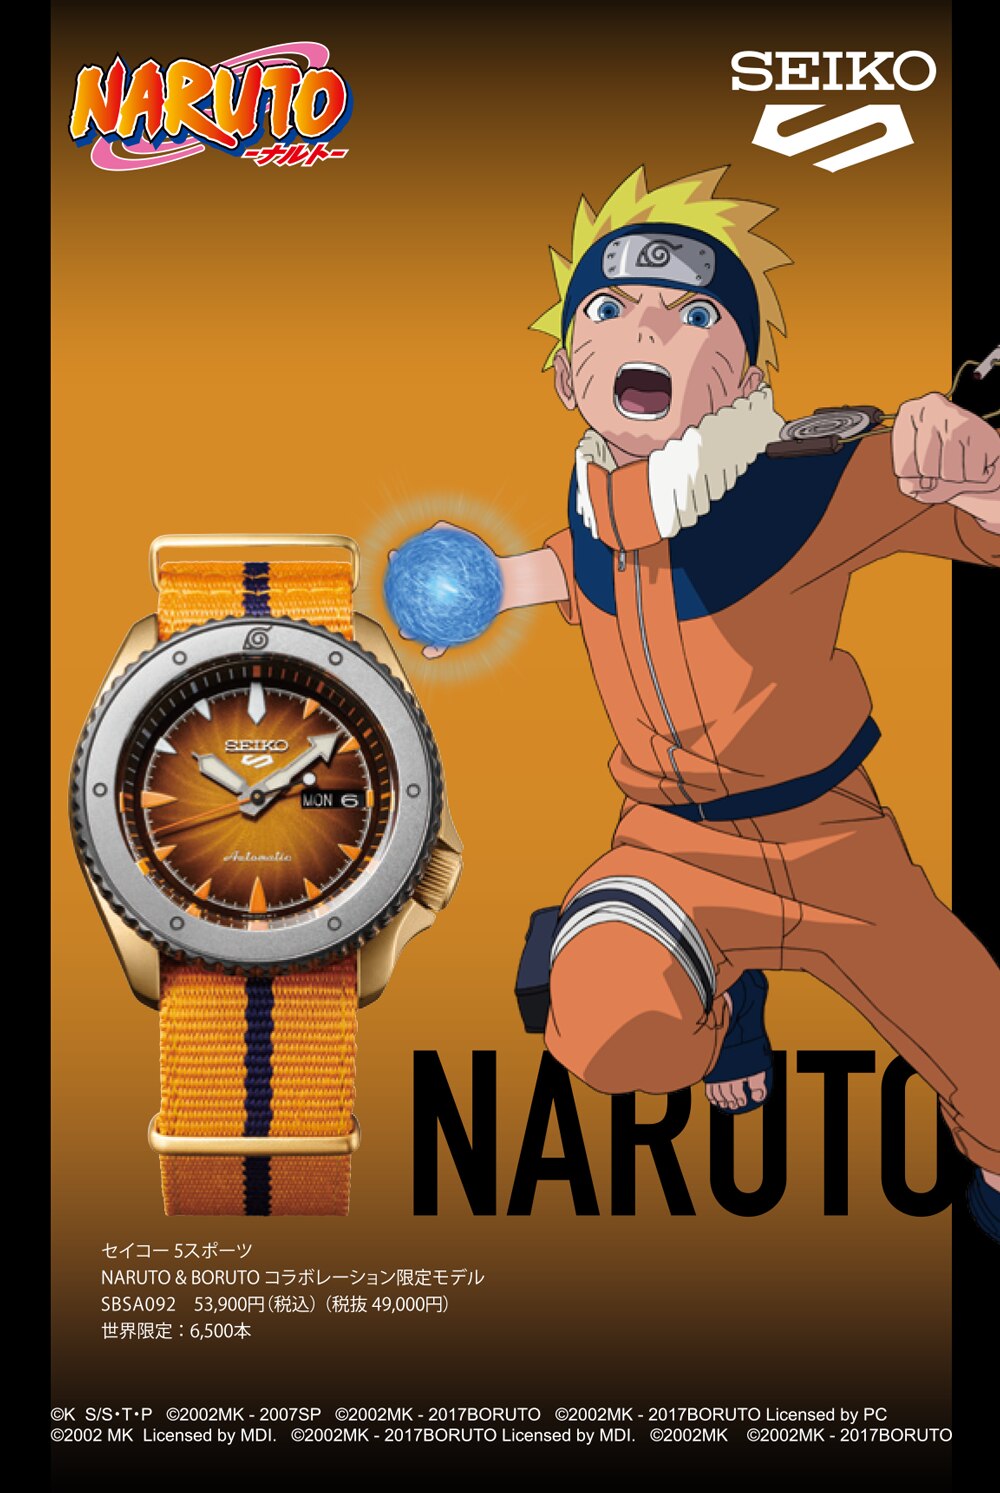 Sbsa092 ナルト Naruto ナルト Boruto ボルト セイコー5スポーツ コラボレーション限定モデル 時計専門店ザ クロックハウス